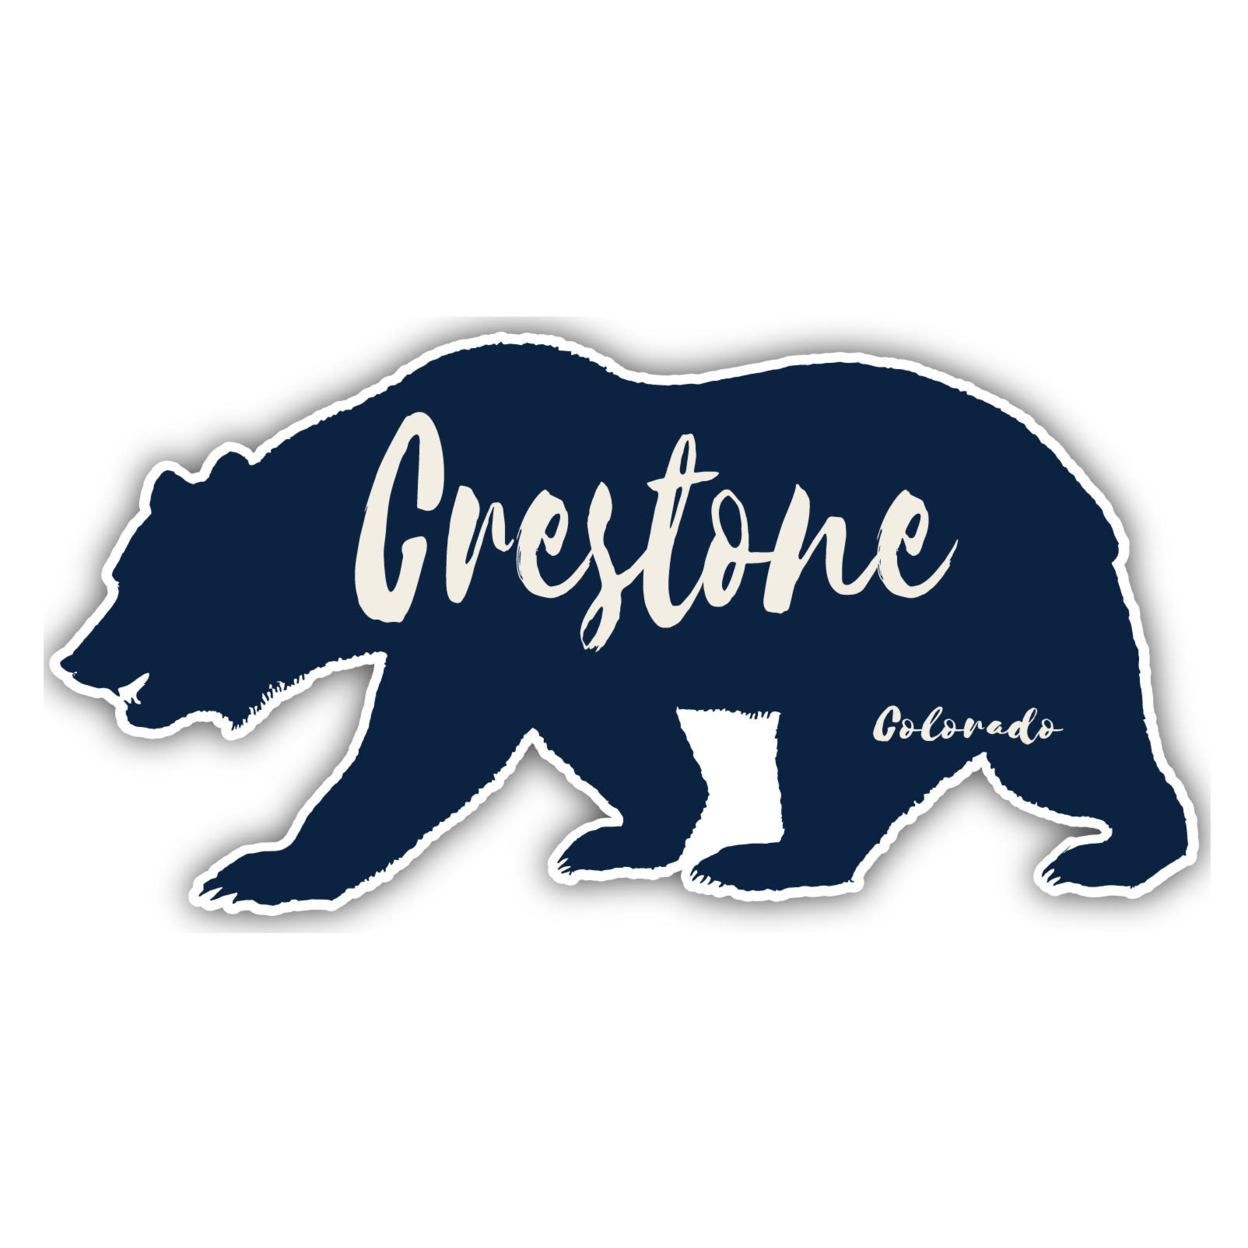 Crestone Colorado Souvenir Decorative Stickers (Choose Theme And Size) - 4-Pack, 10-Inch, Bear